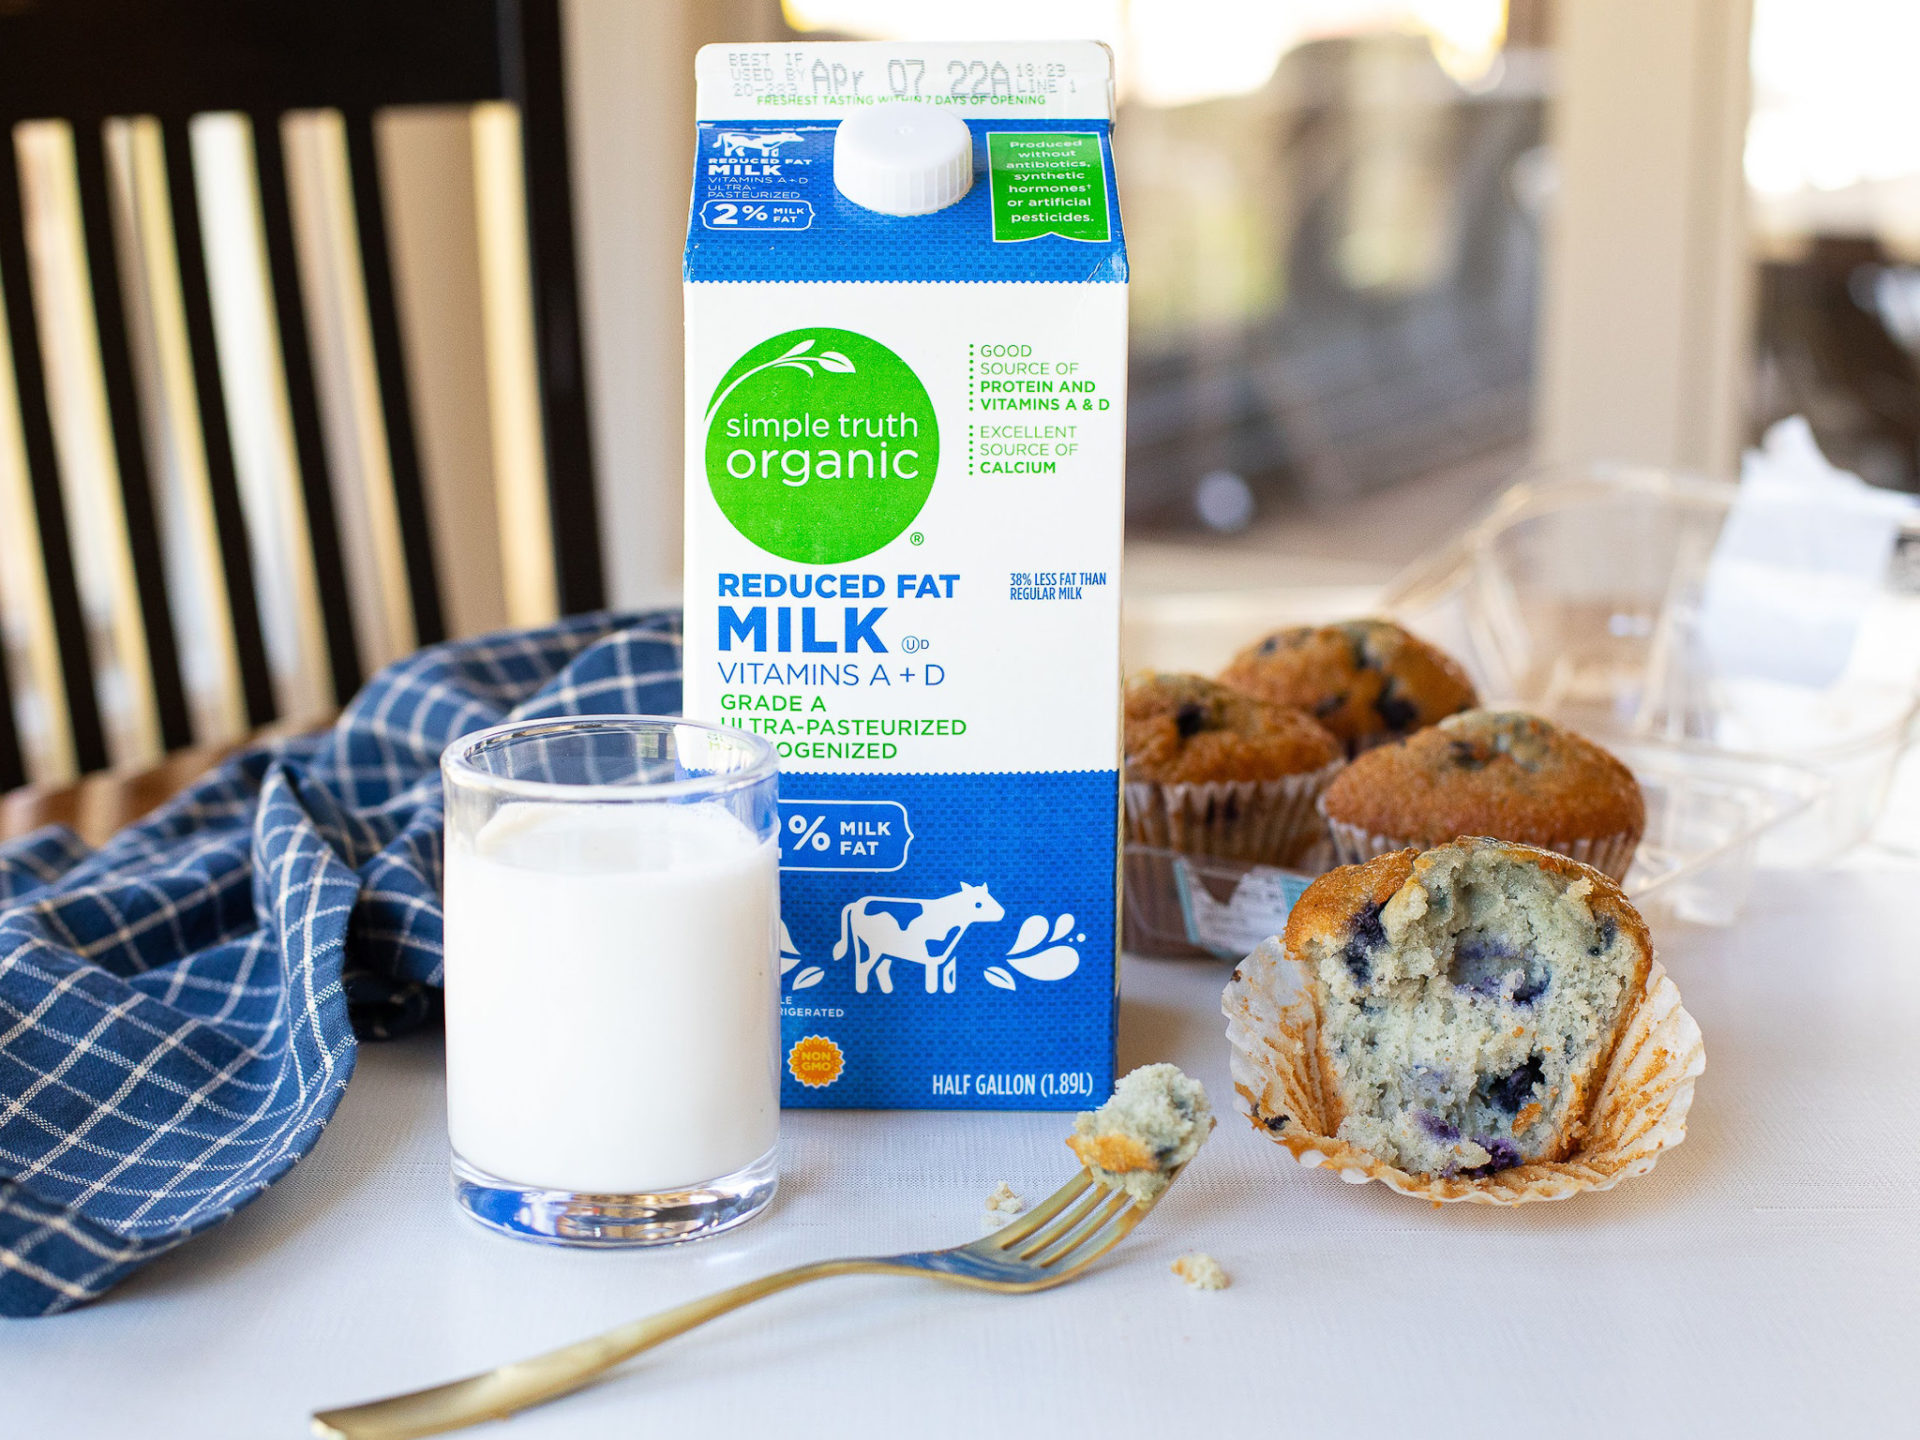 Get Half Gallon Cartons Of Simple Truth Organic Milk For Just $2.99